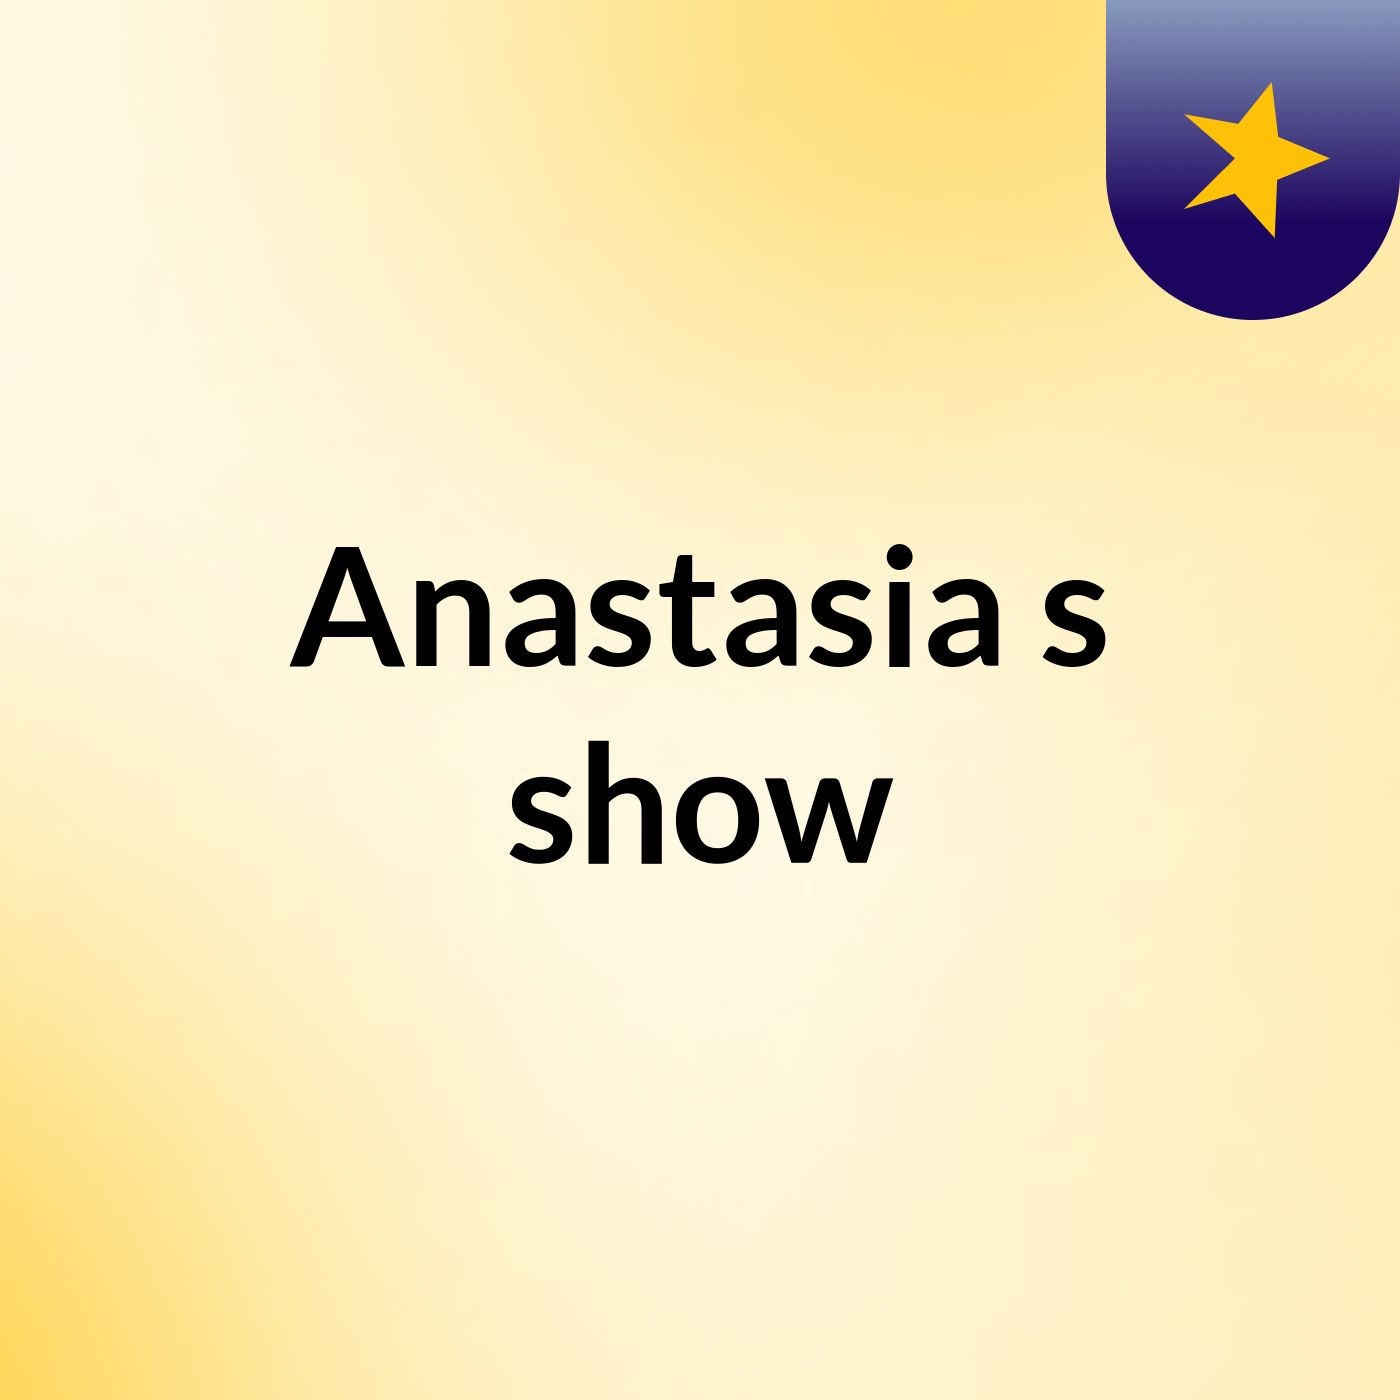 Anastasia's show